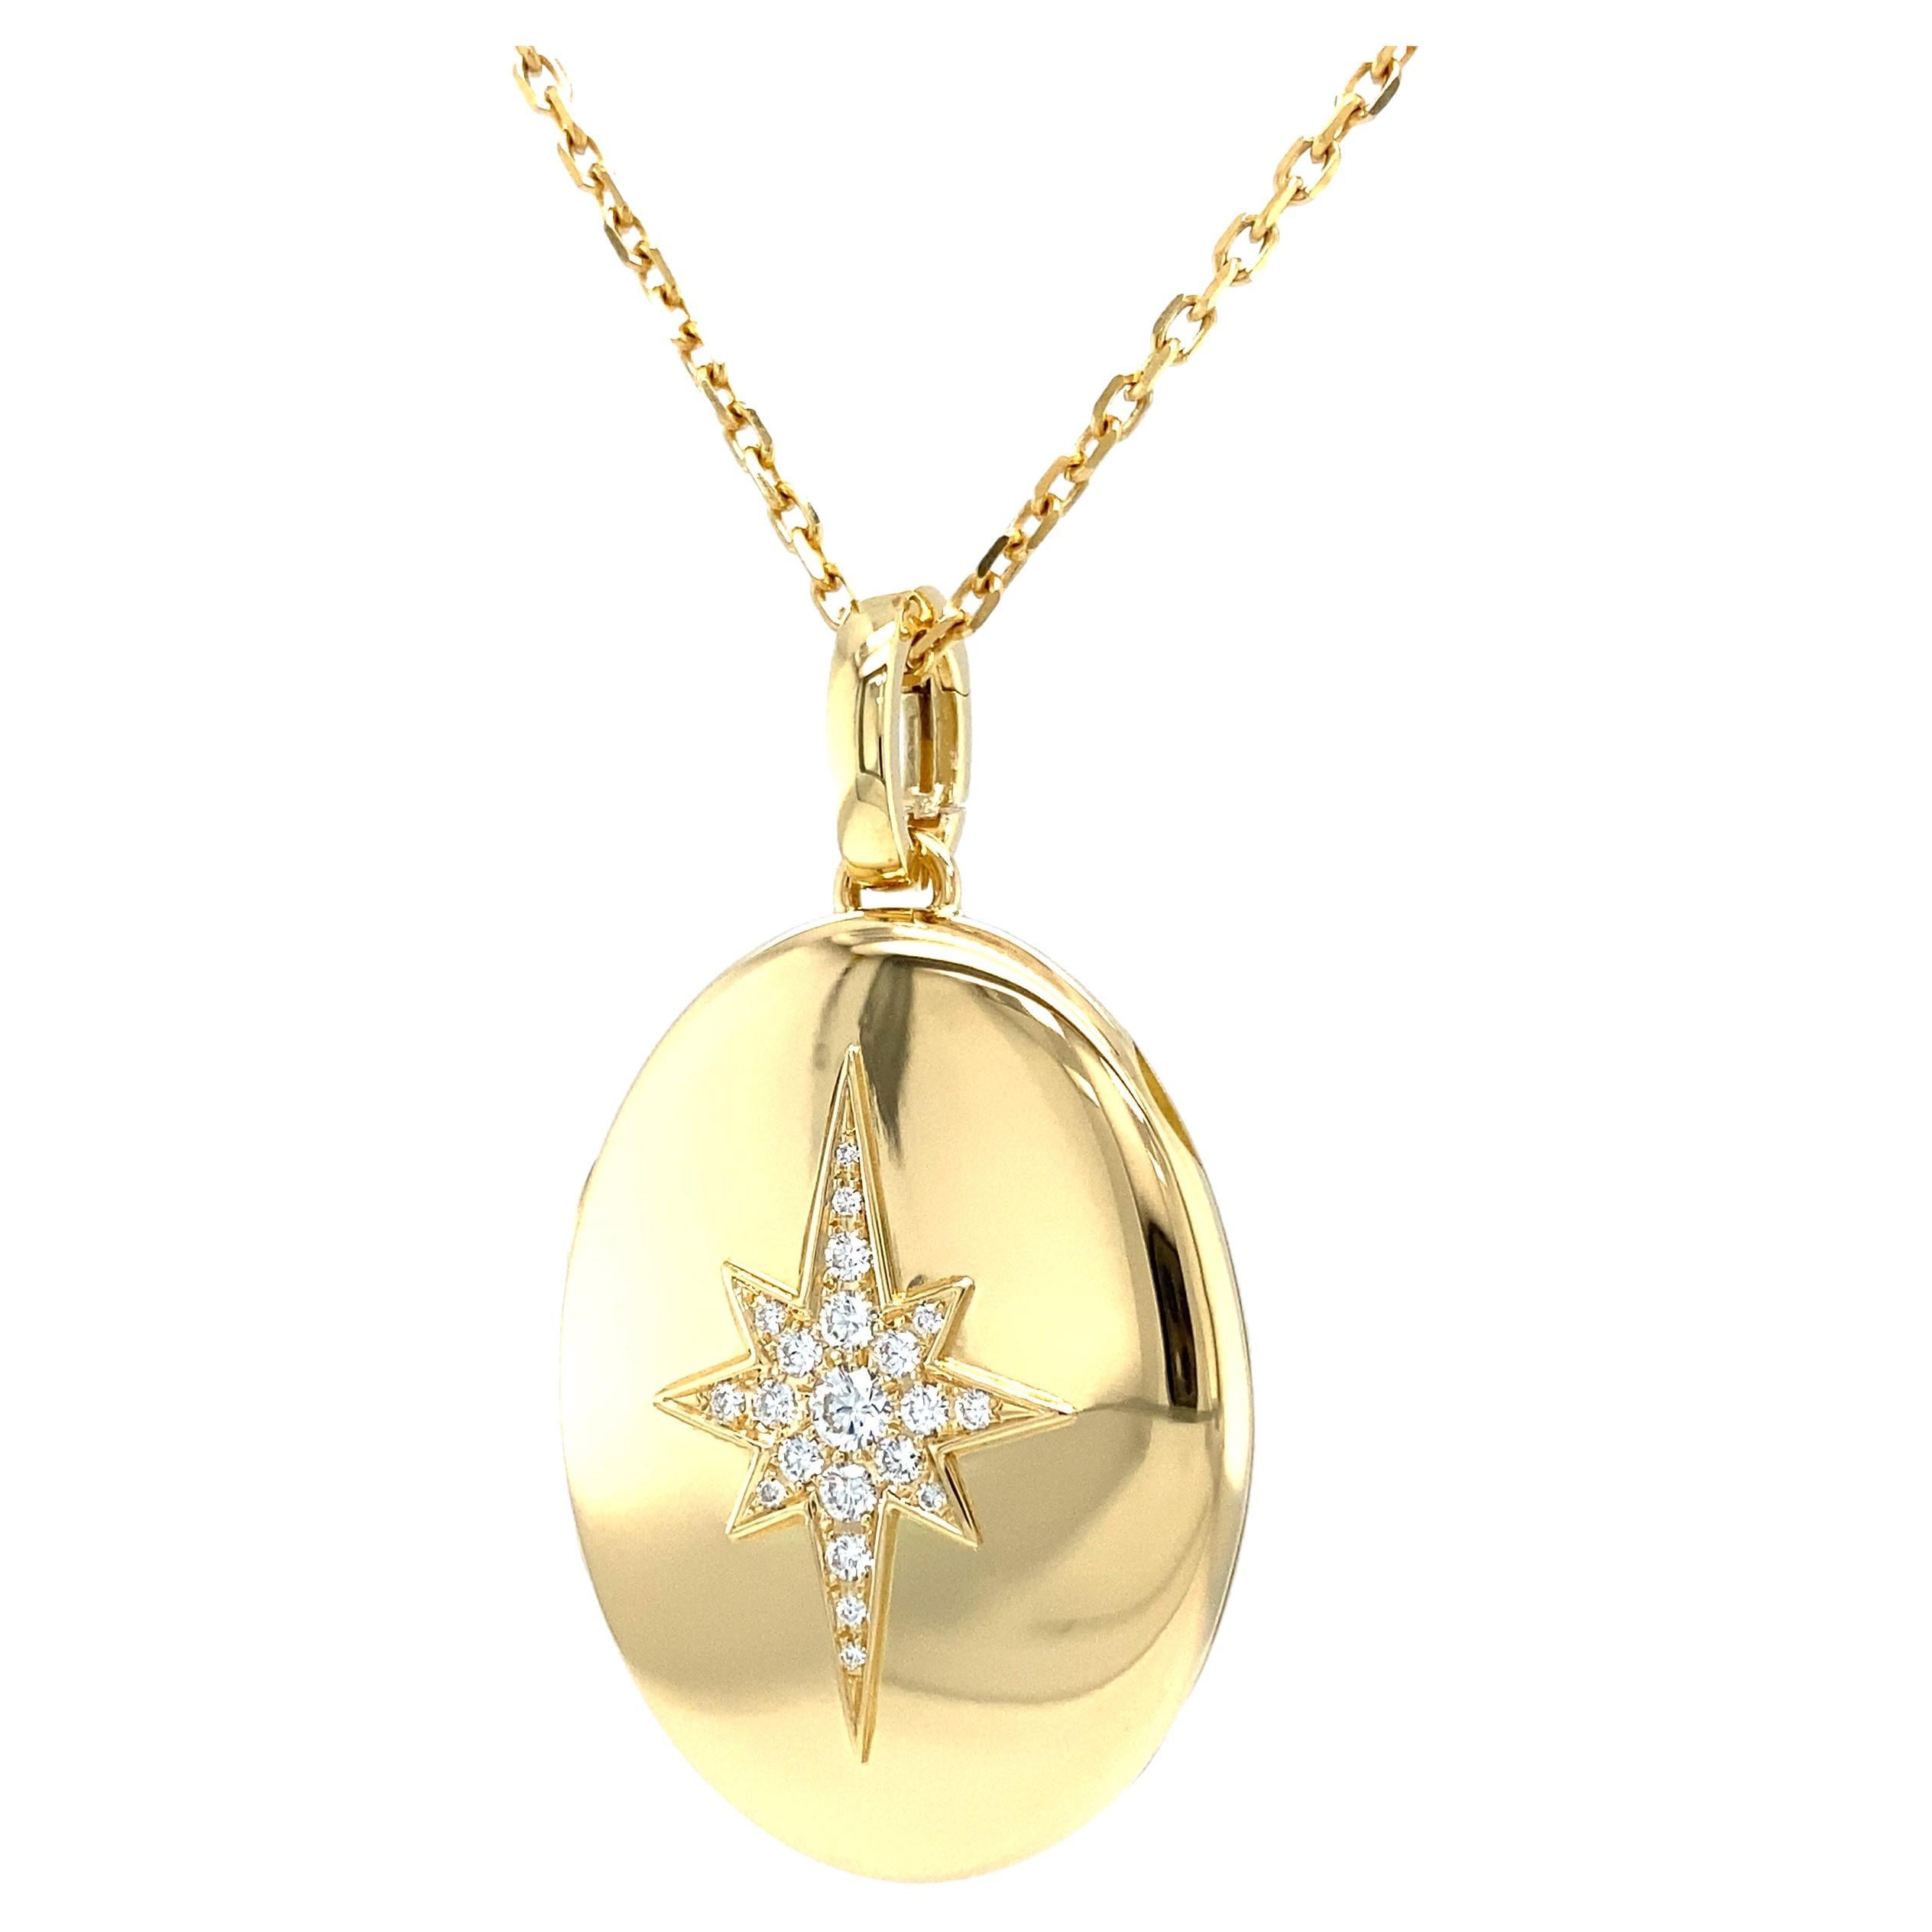 Oval Polished Locket Pendant Necklace - 18k Yellow Gold - 9 Diamonds 0.14ct G VS